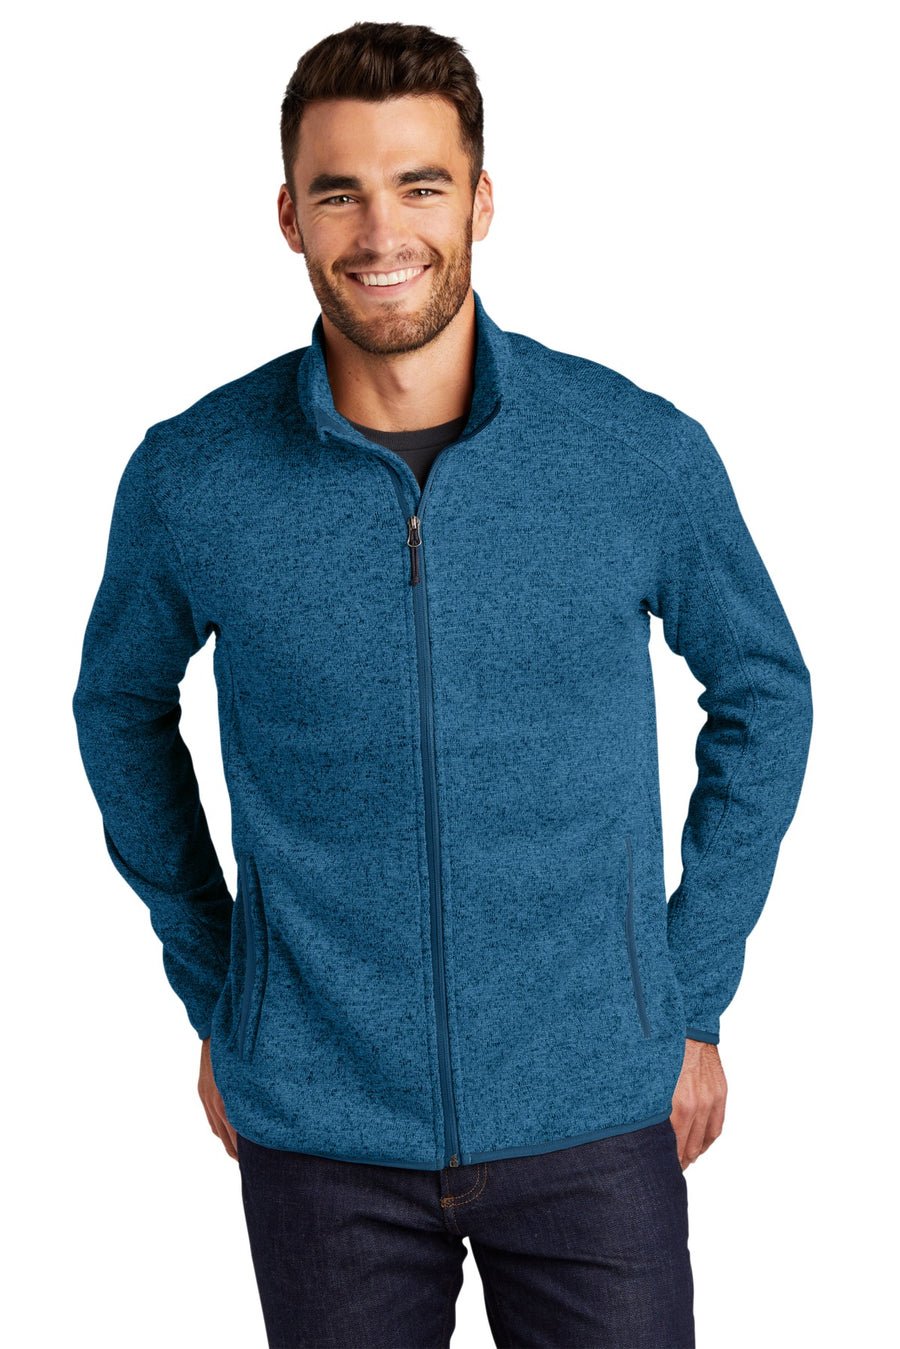 Port Authority Sweater Fleece Jacket.